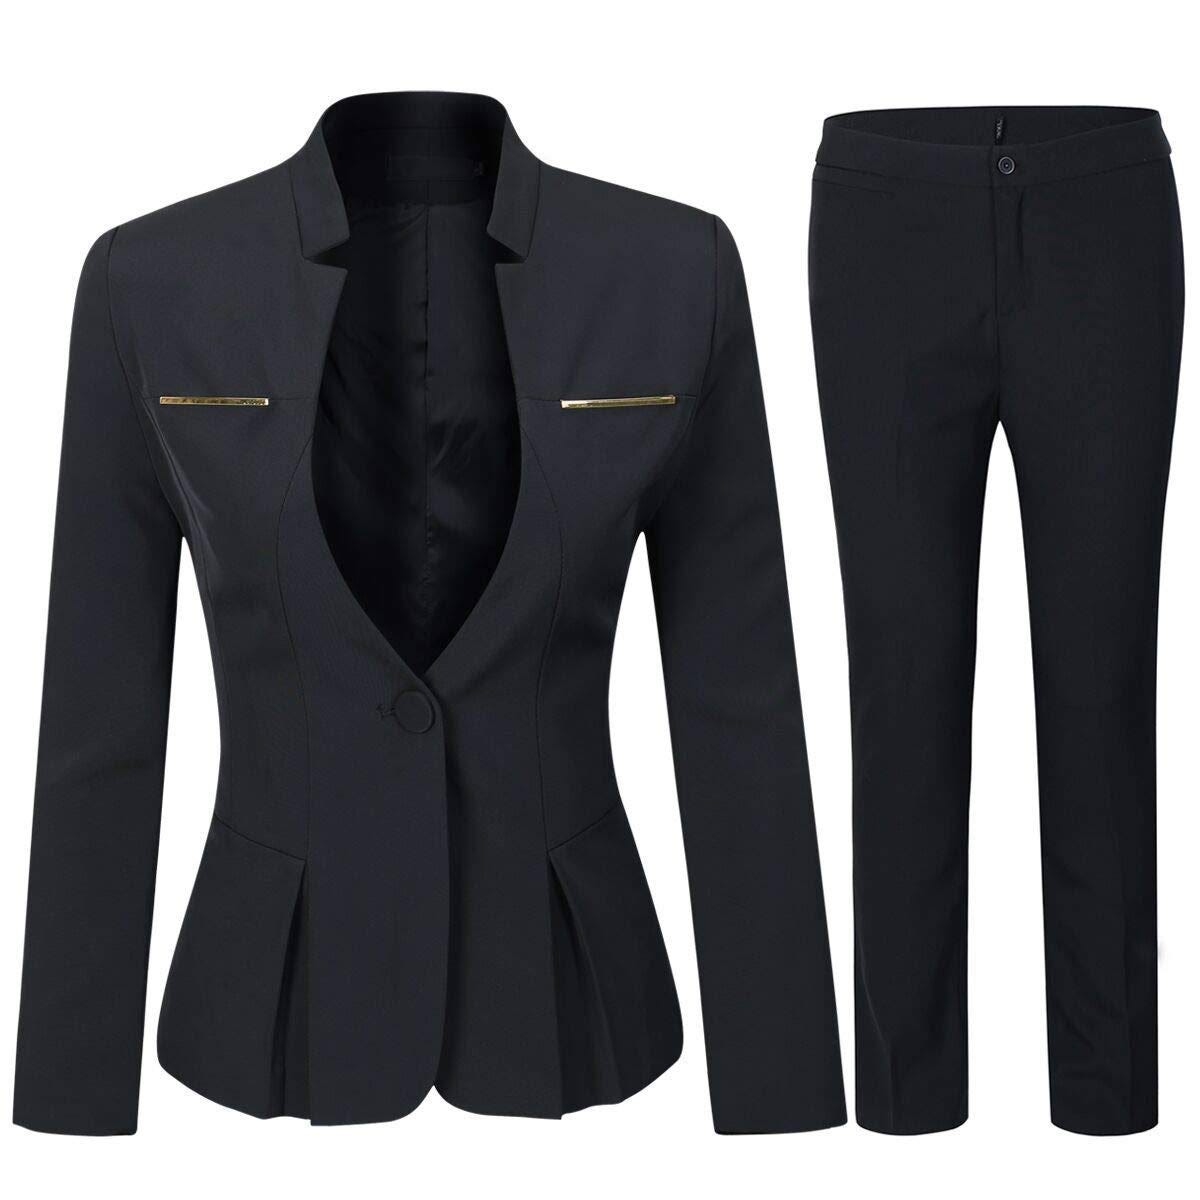 Elegant Black Business Suit Set with Blazer and Pant | Image